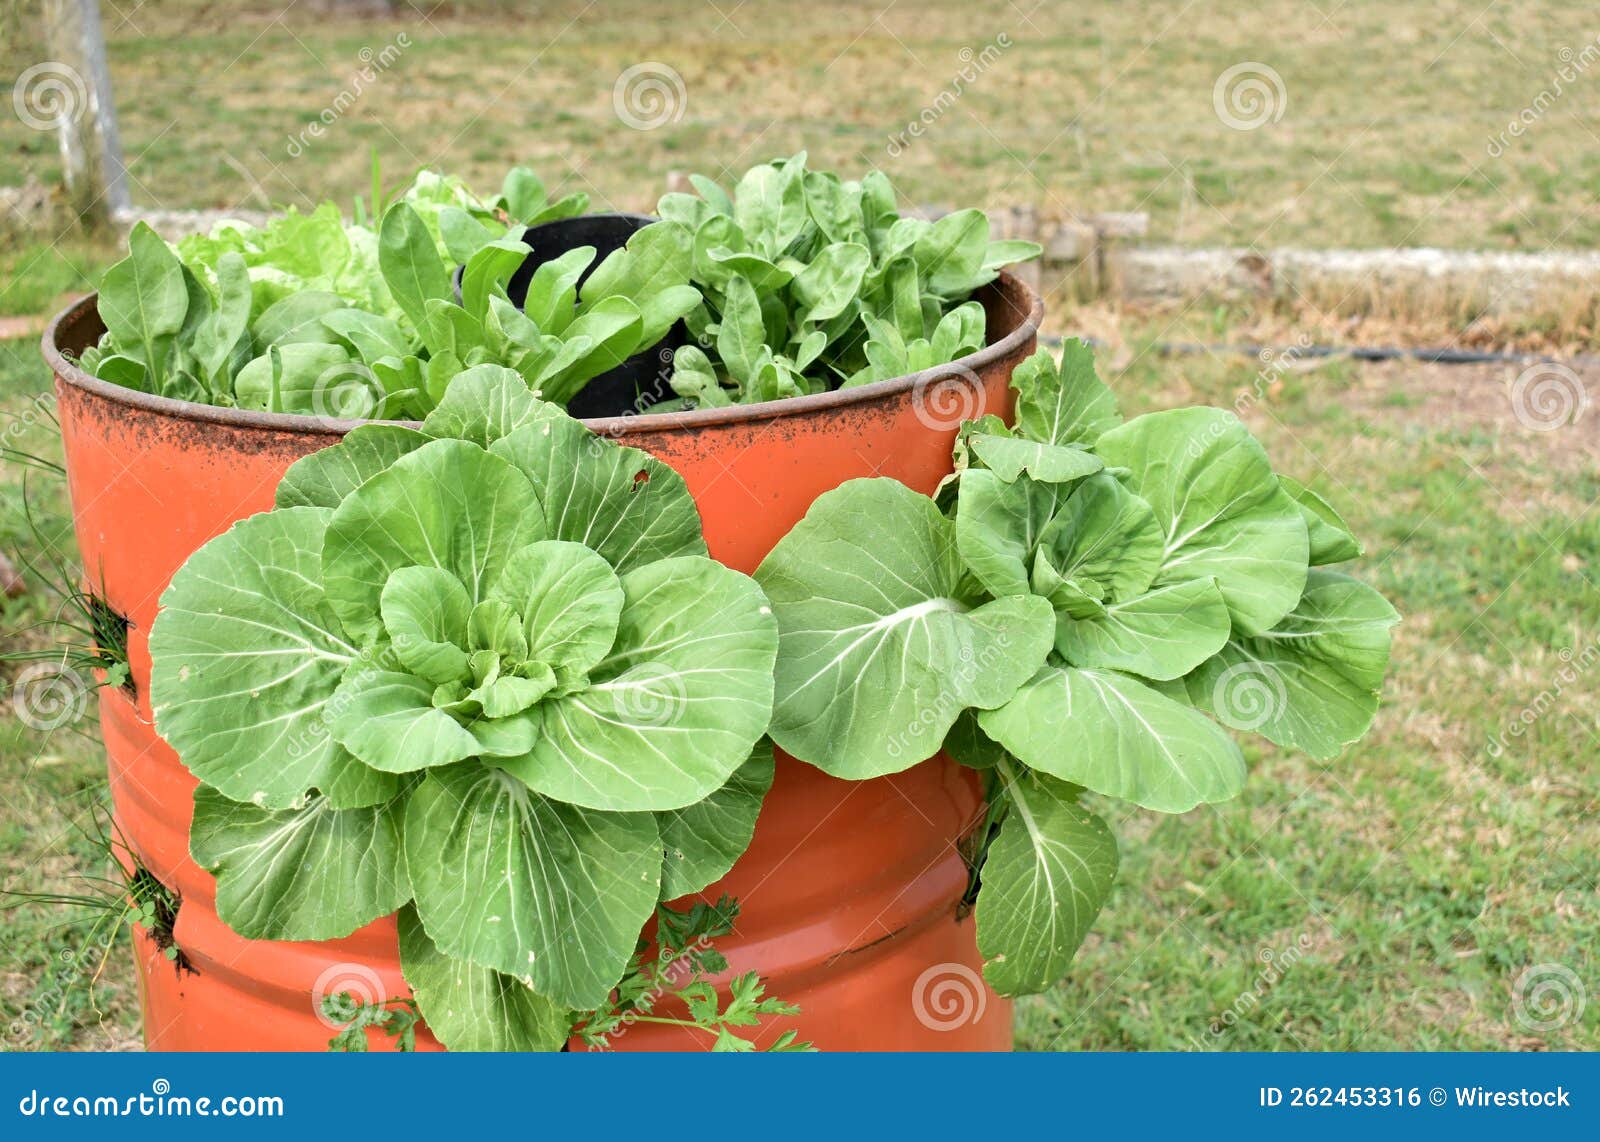 green leaf lettuce from agroecological garden